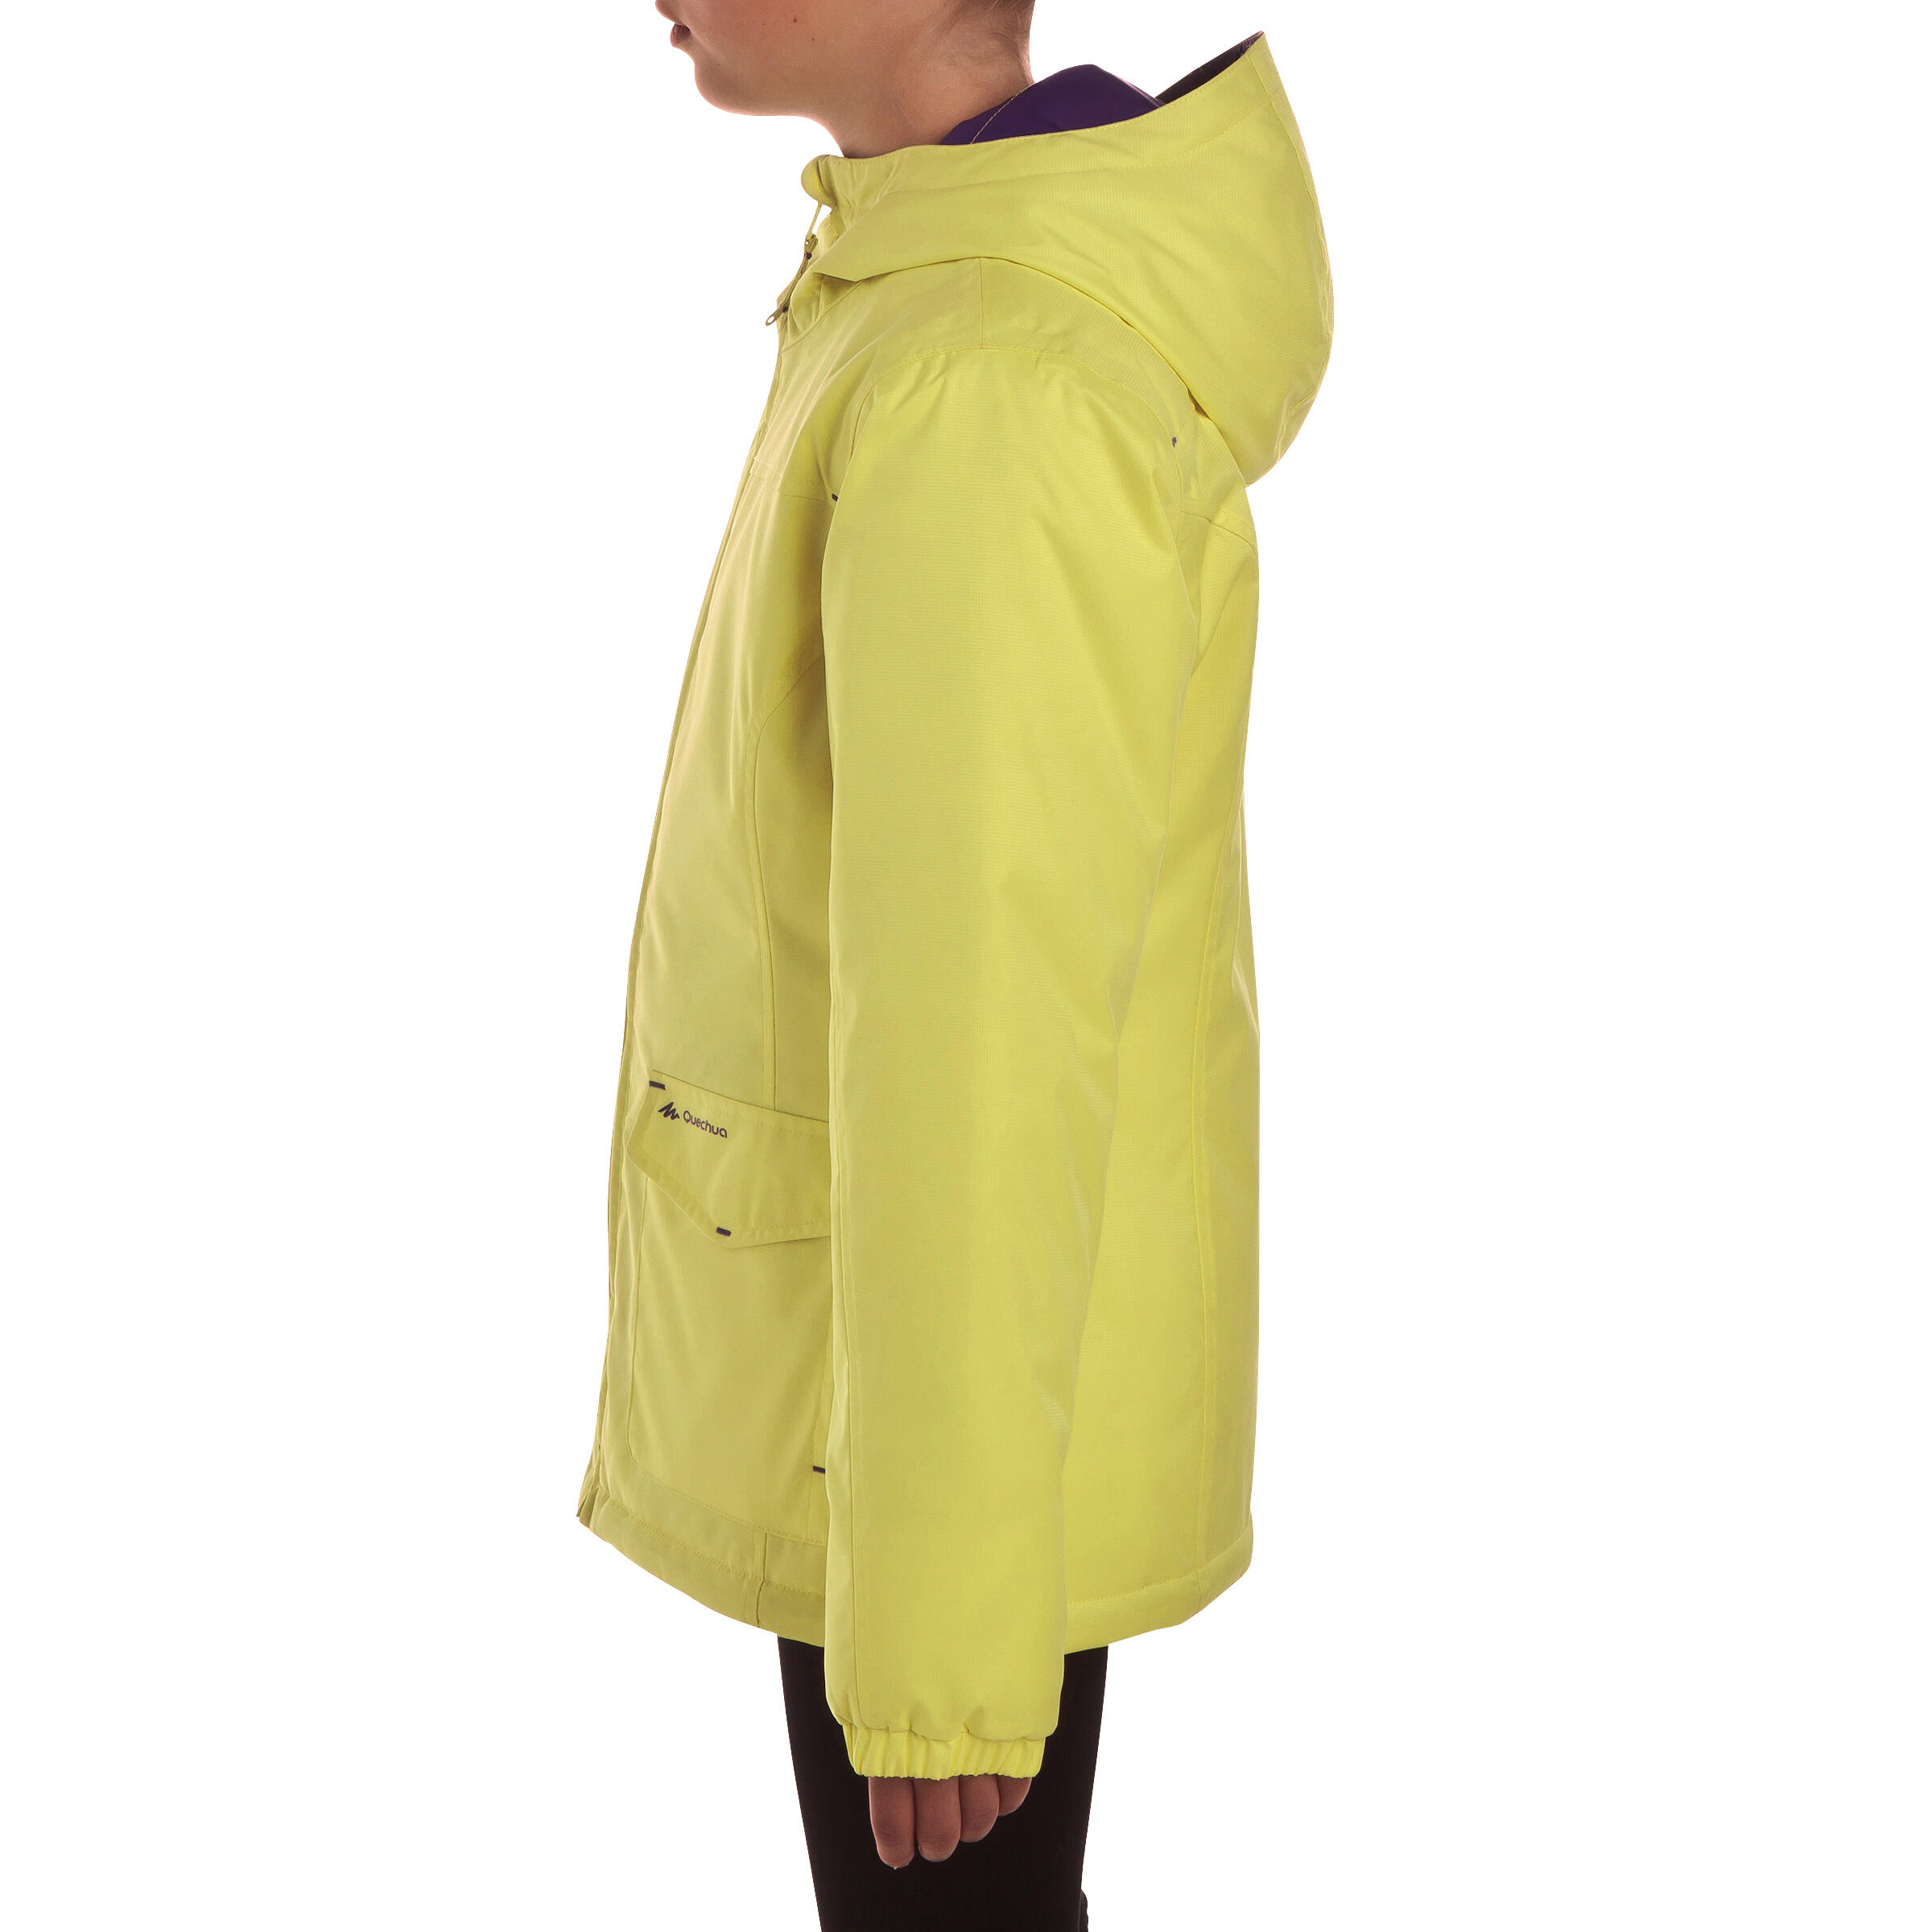 Arpenaz 400 Warm Reversible Girls' Jacket Yellow 11/11